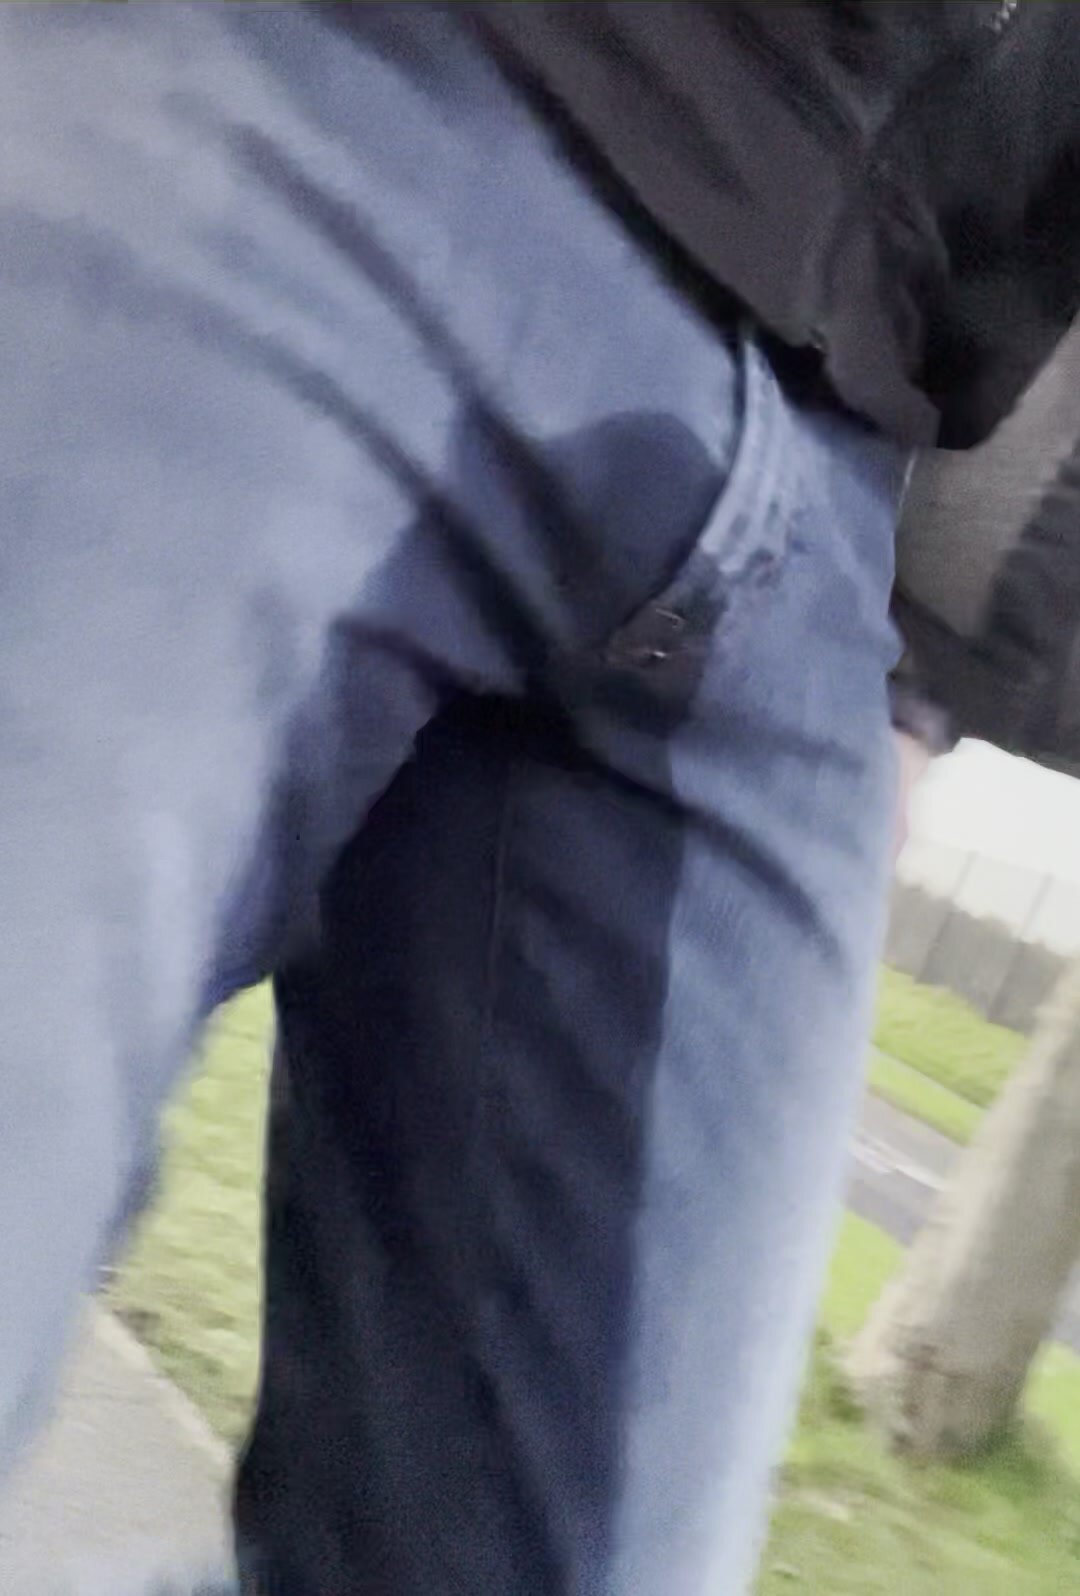 Piss Jeans Humiliating Public Walk Home